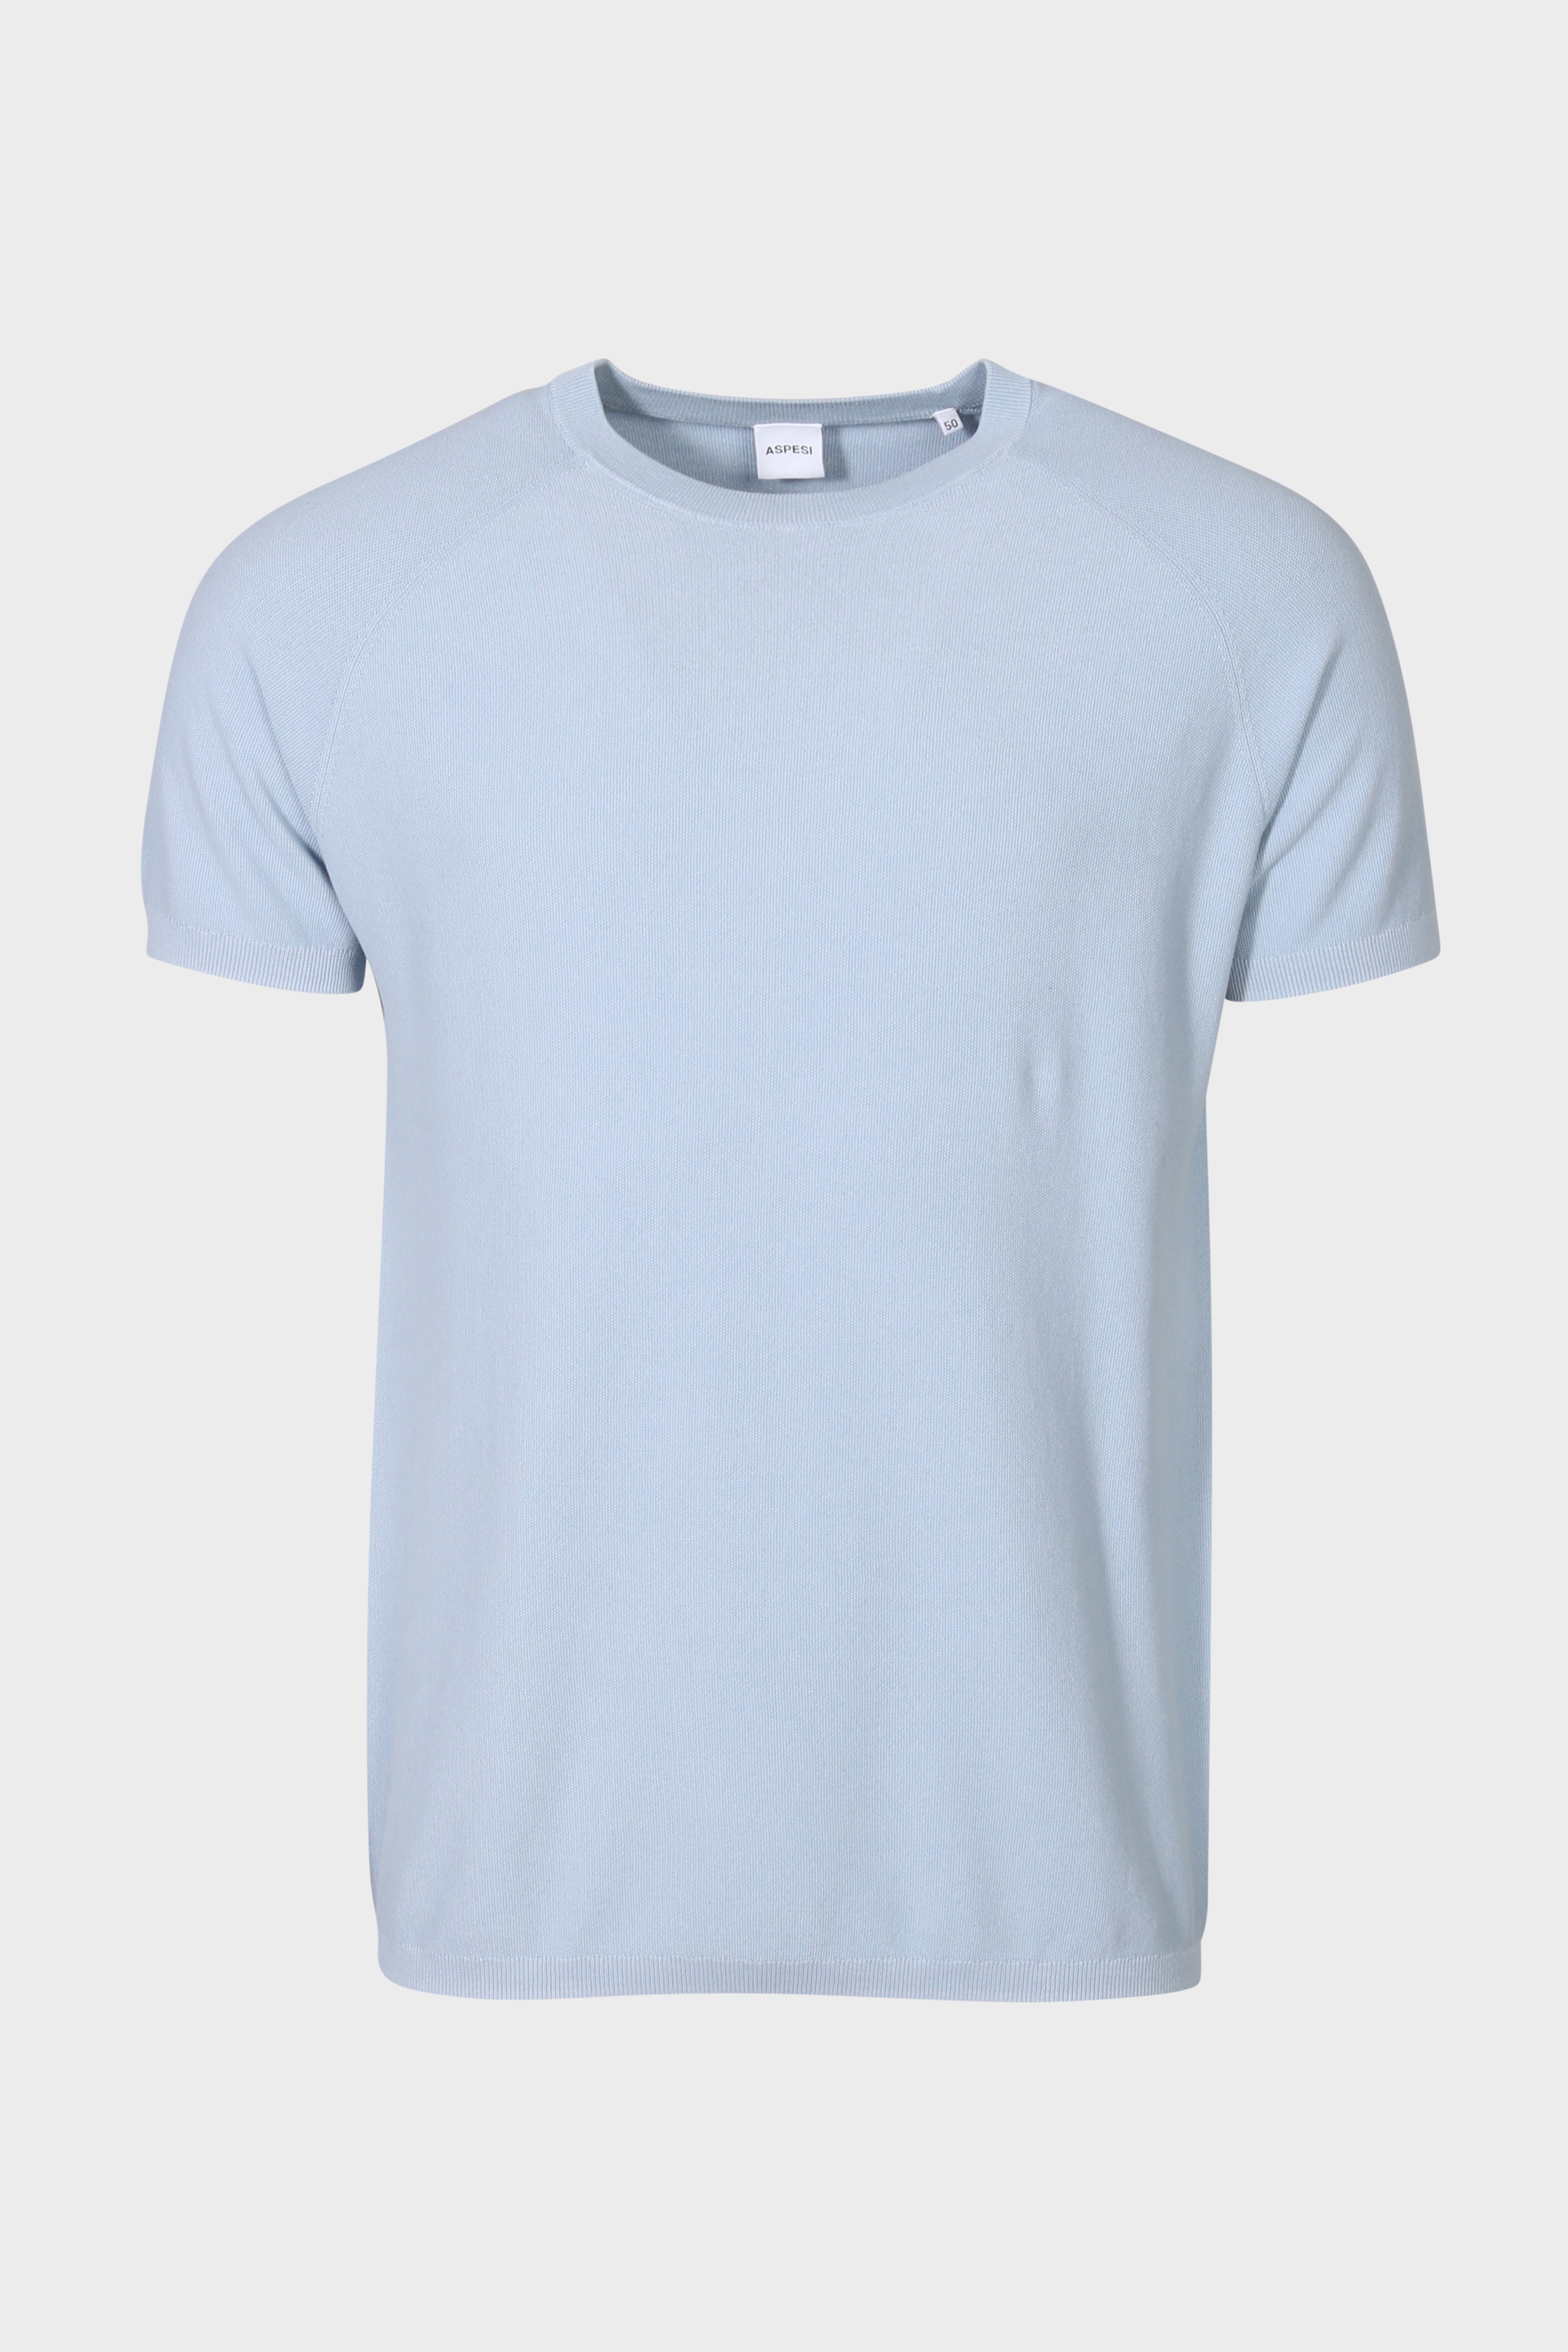 ASPESI Knit T-Shirt in Light Blue